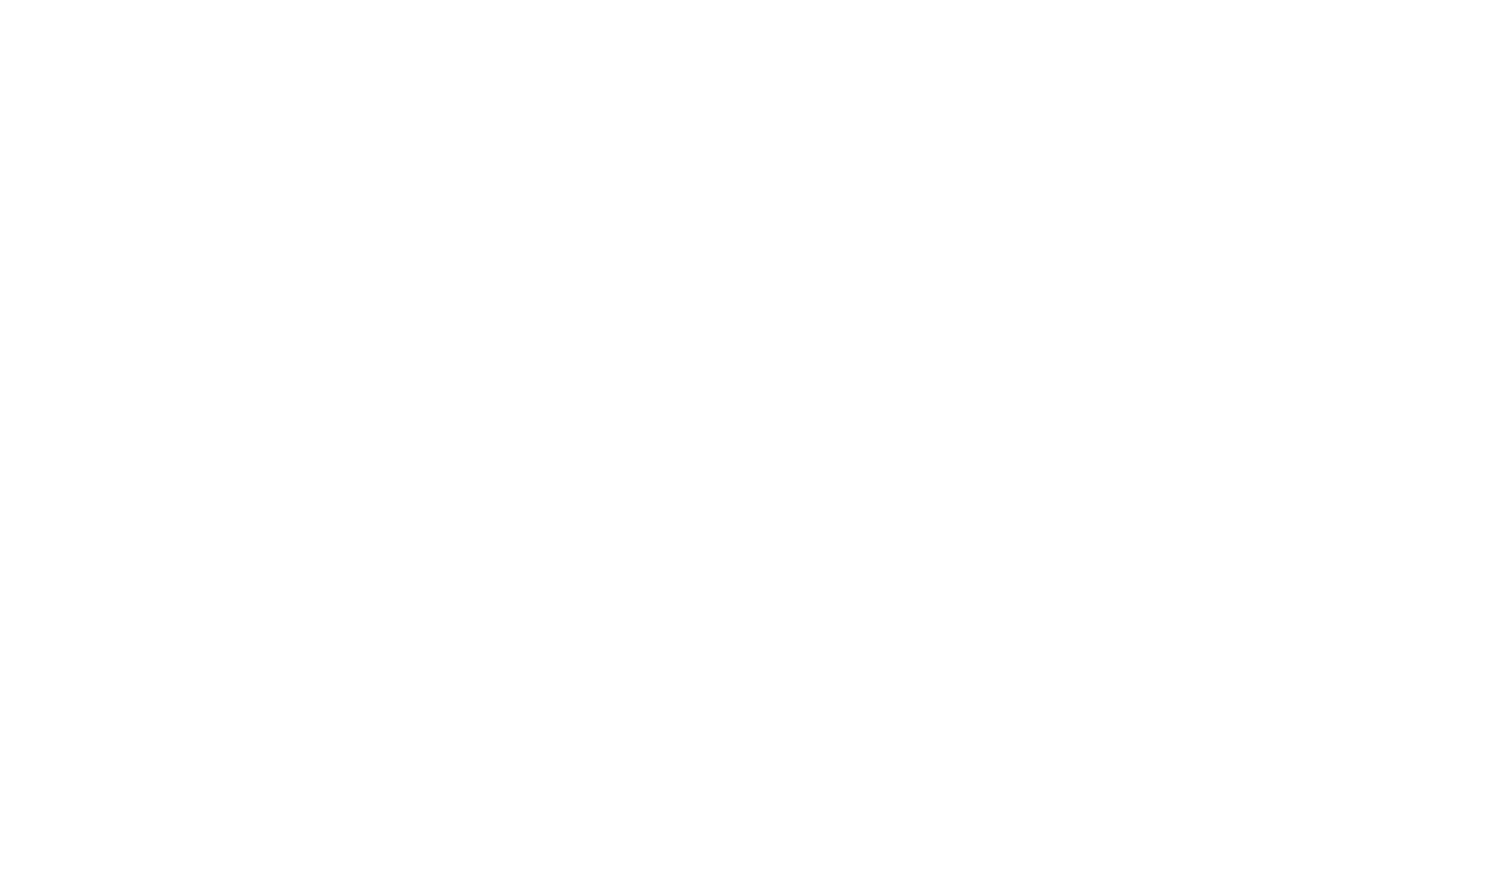 Kraus Capital